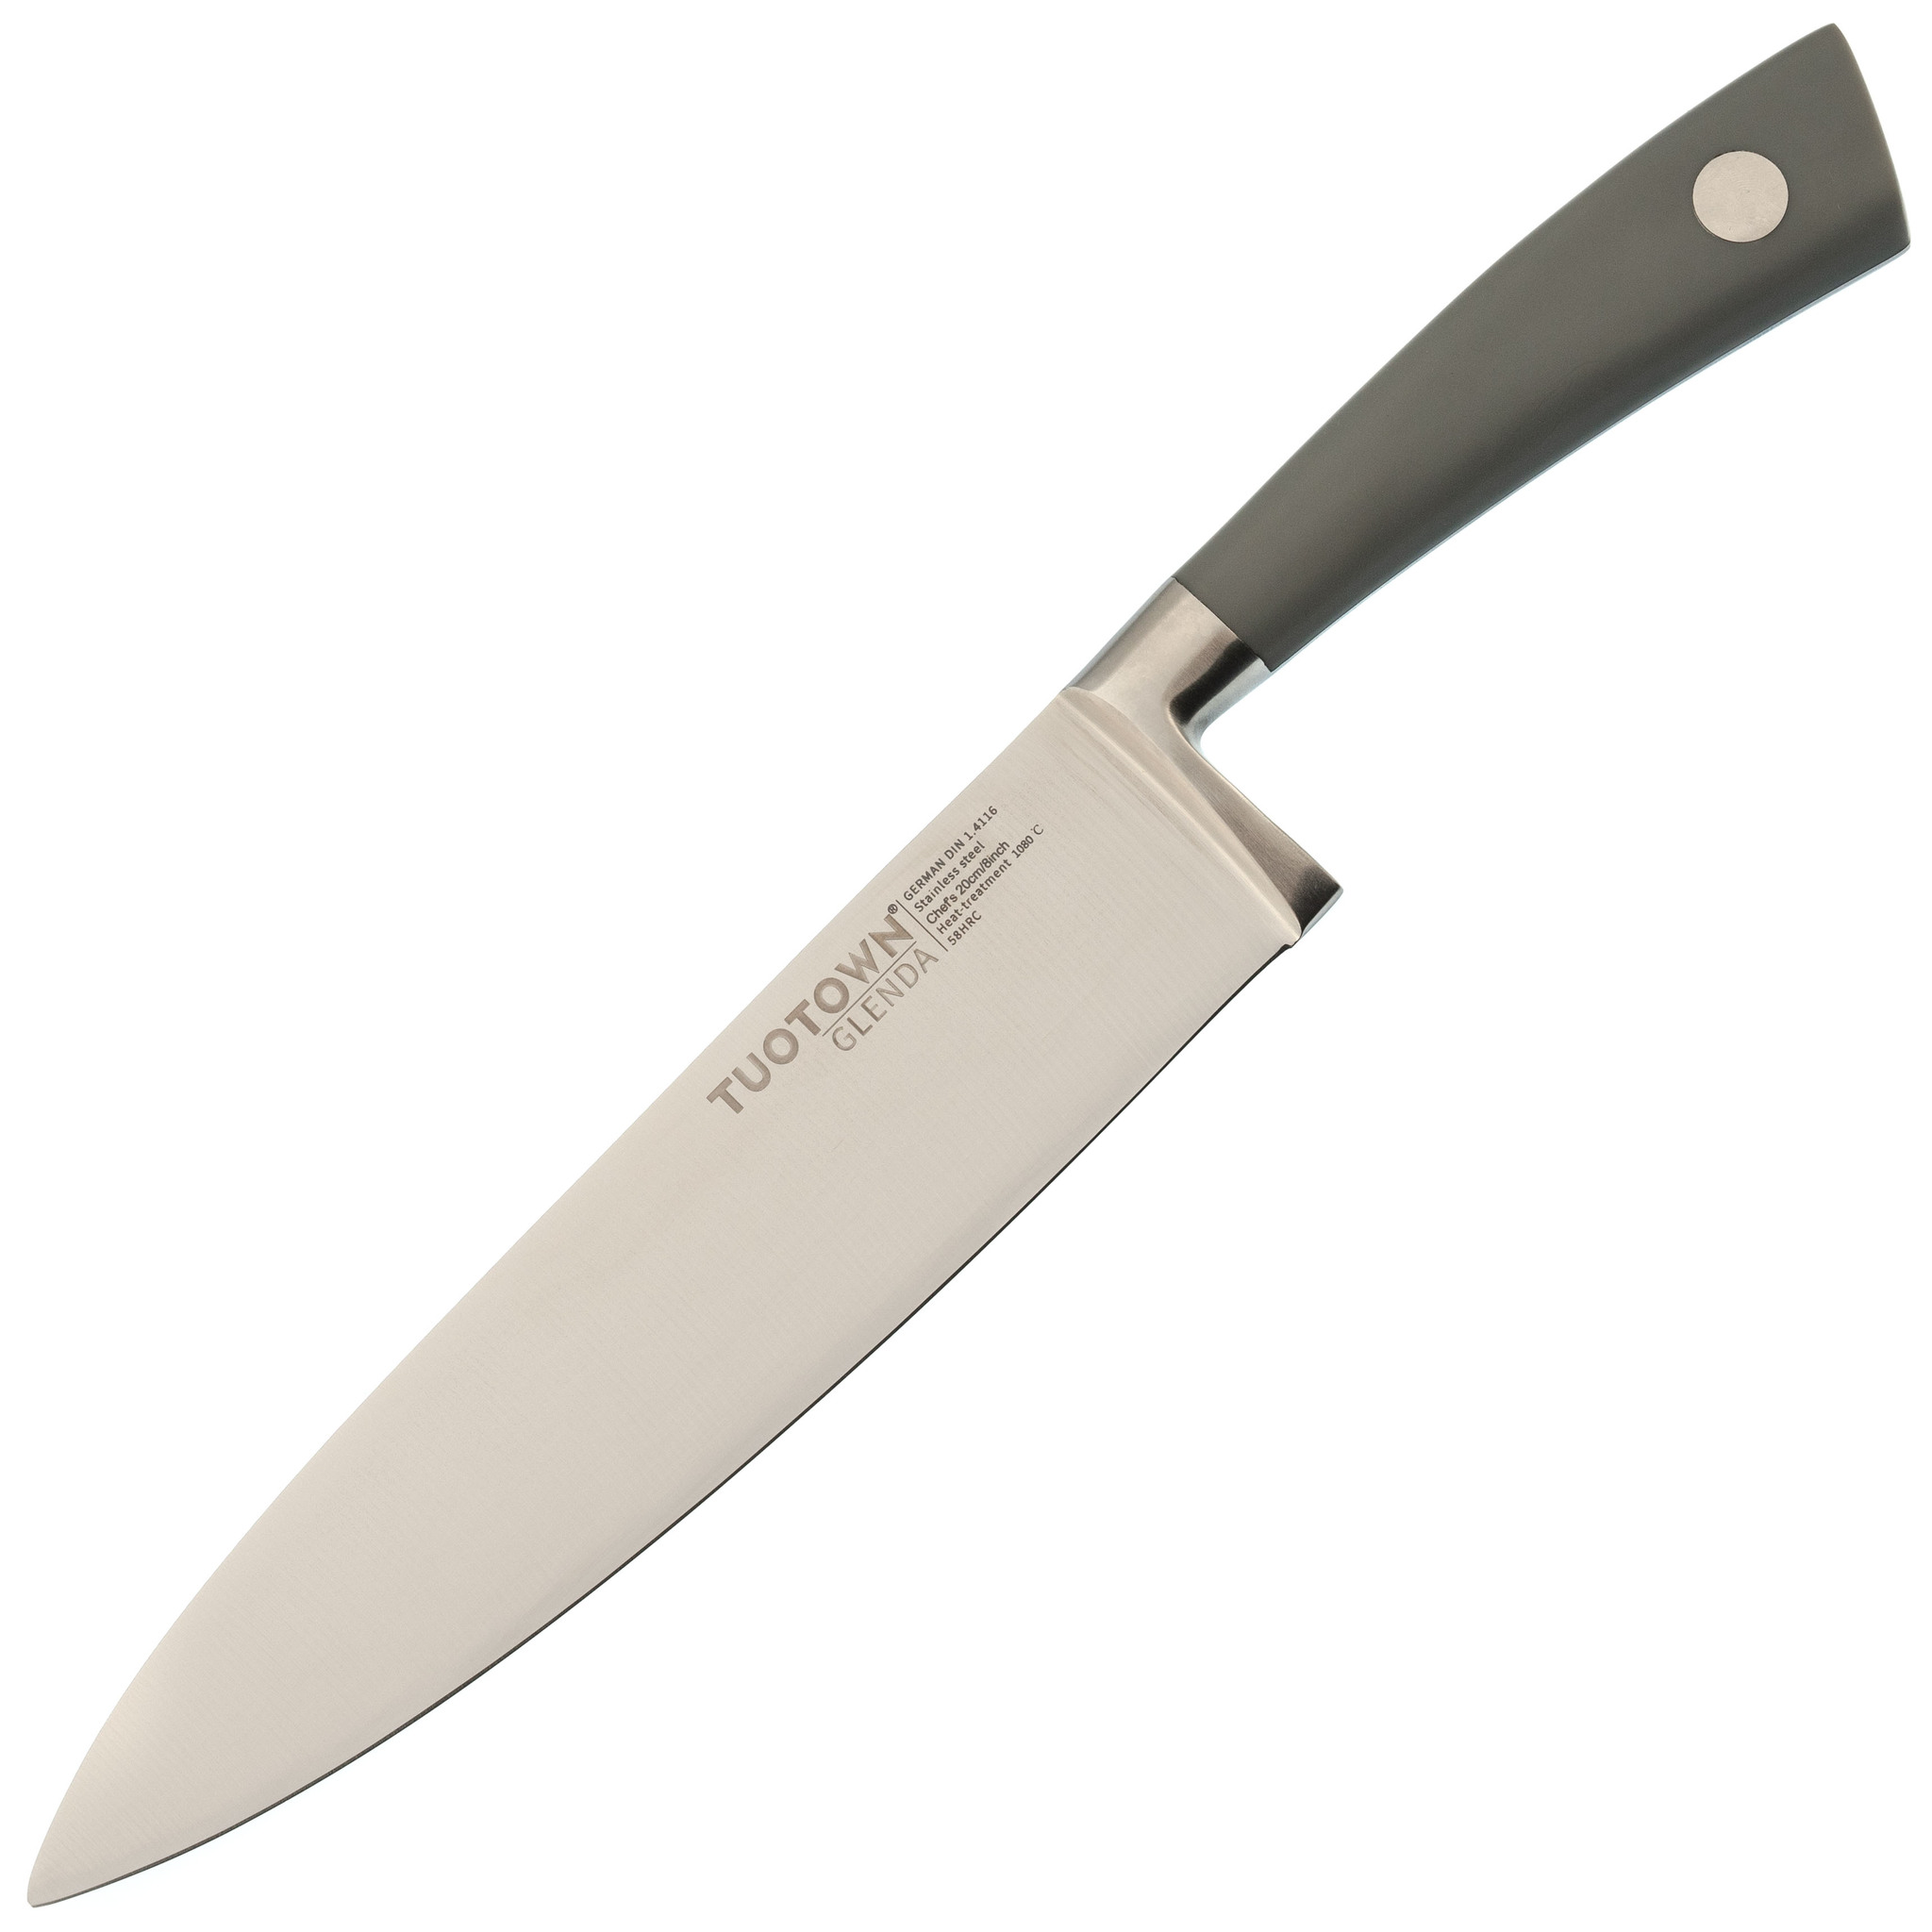 Кухонный нож Шеф Tuotown, сталь 1.4116, пластик